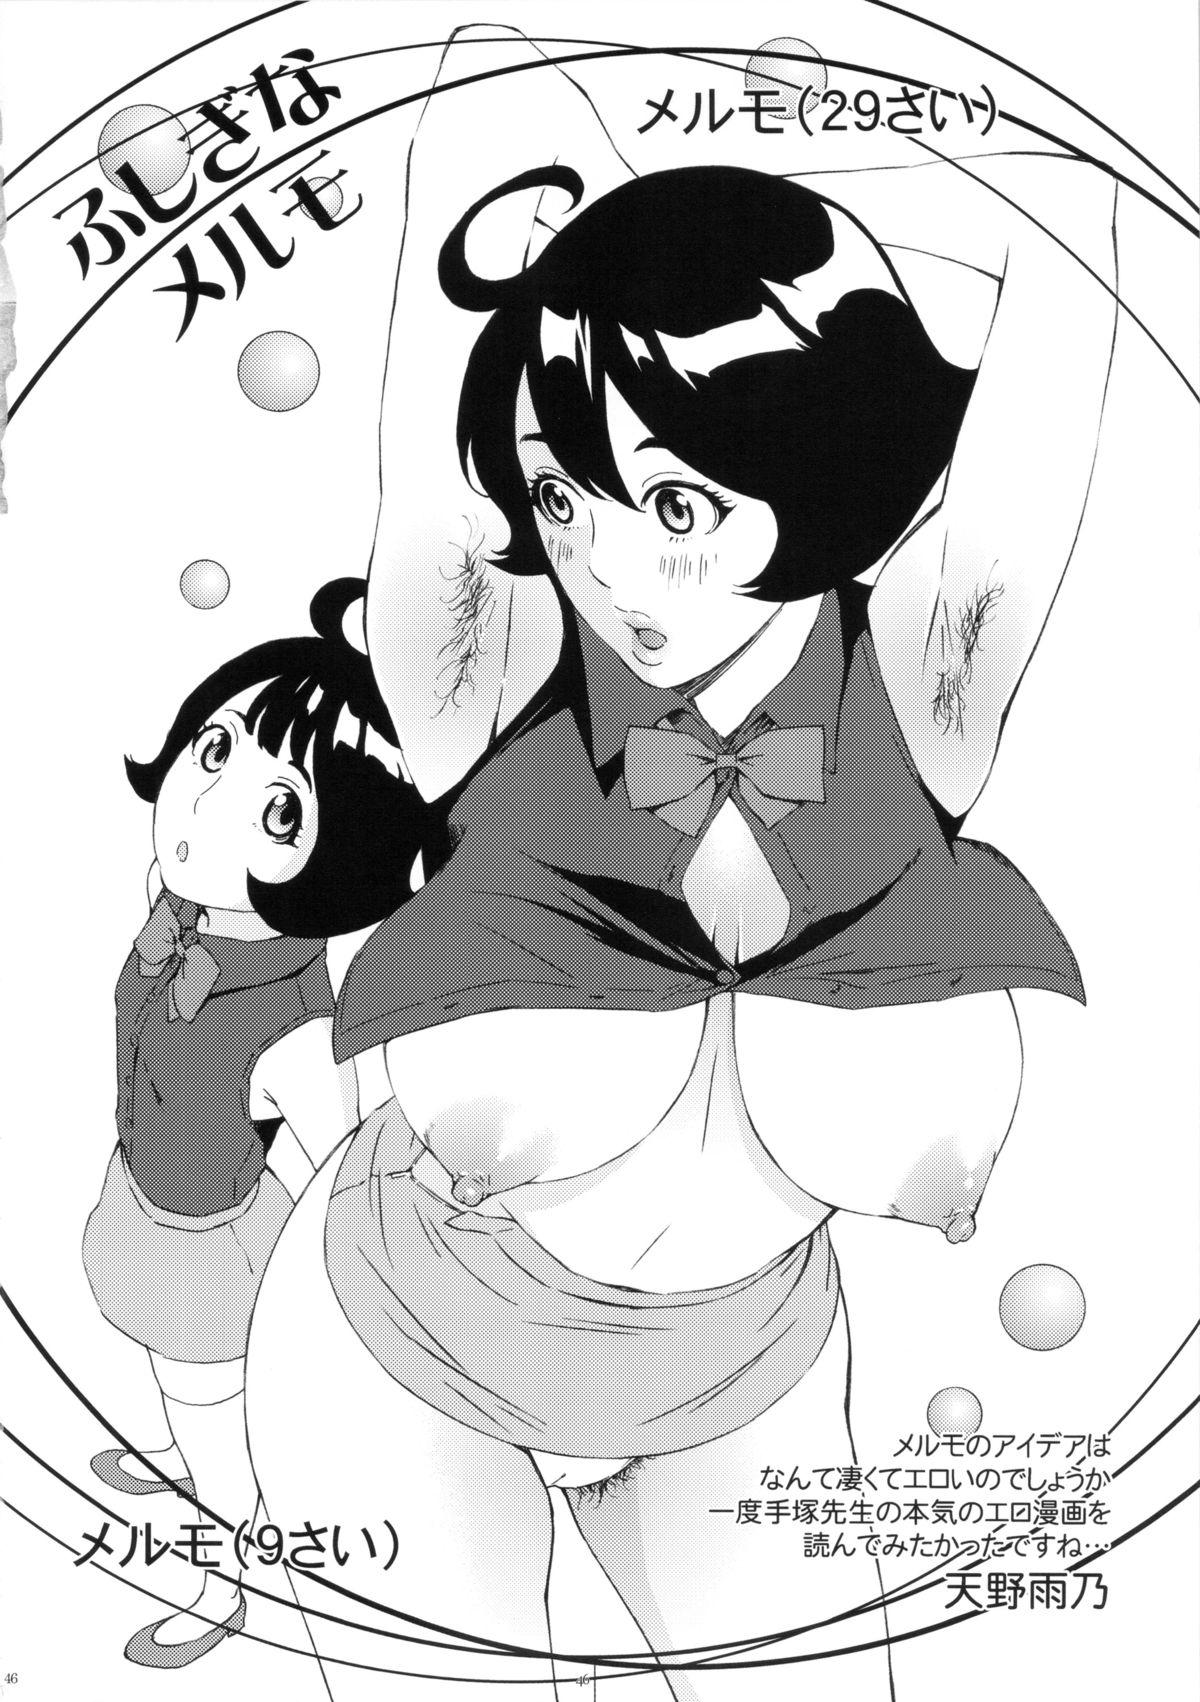 FLOUR2 Tezuka Manga Graffiti 45